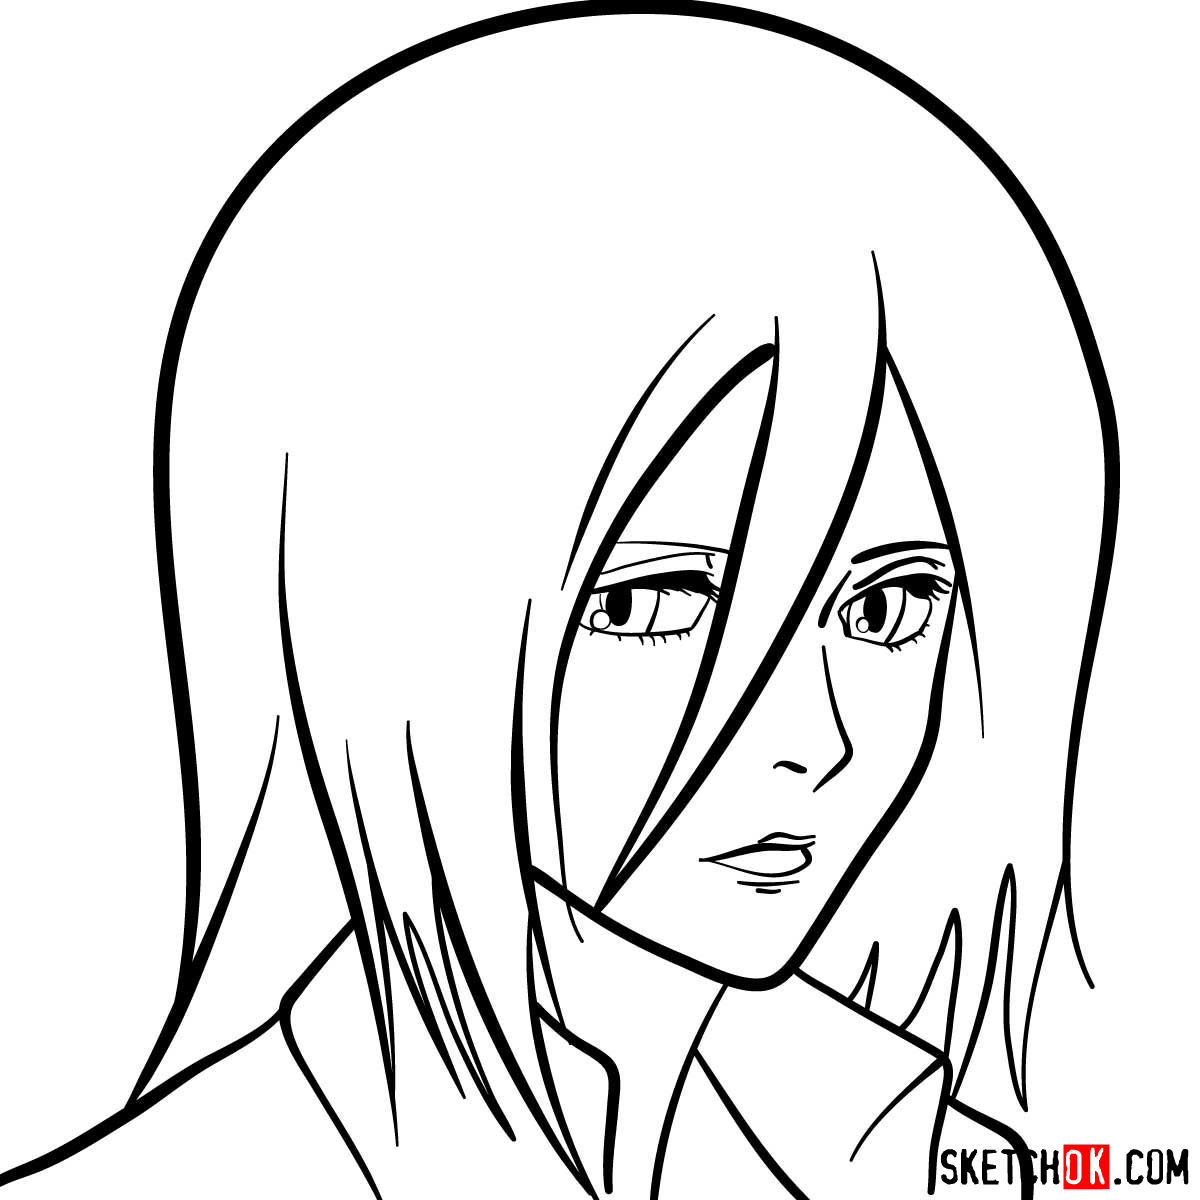 How to draw Mikasa Ackerman's face